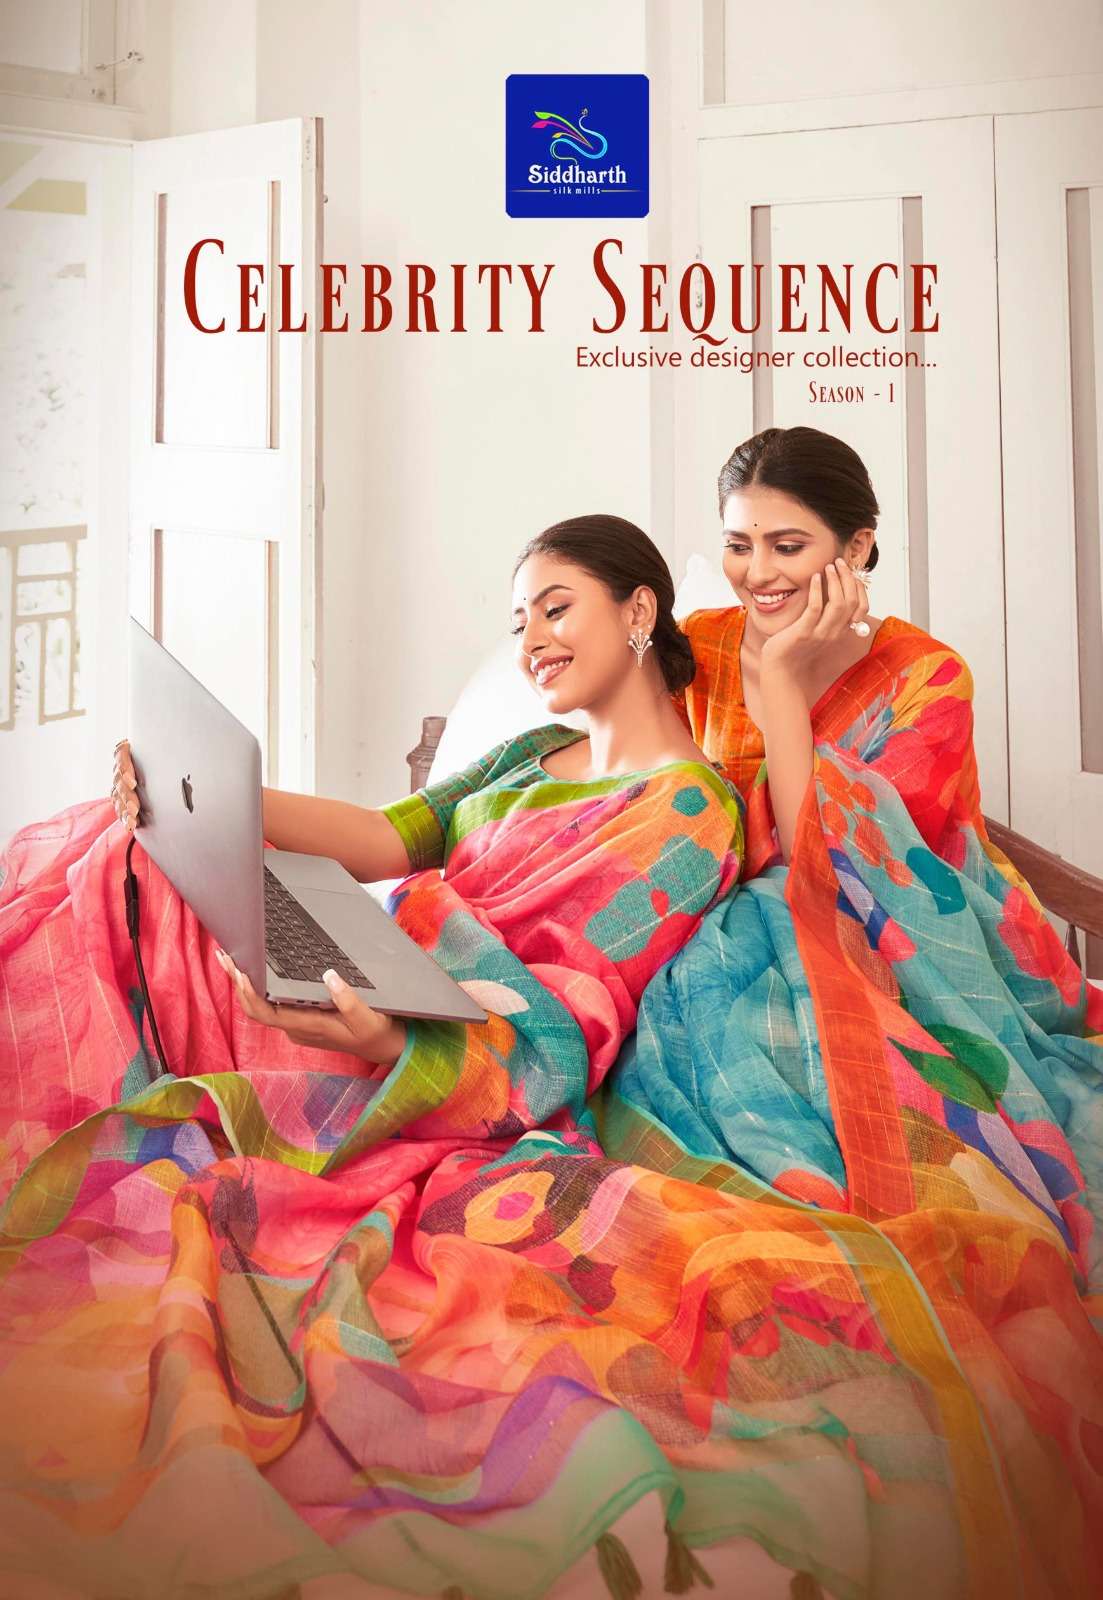 siddharth silk mills present celebrity sequence fancy casual wear saree wholealer 